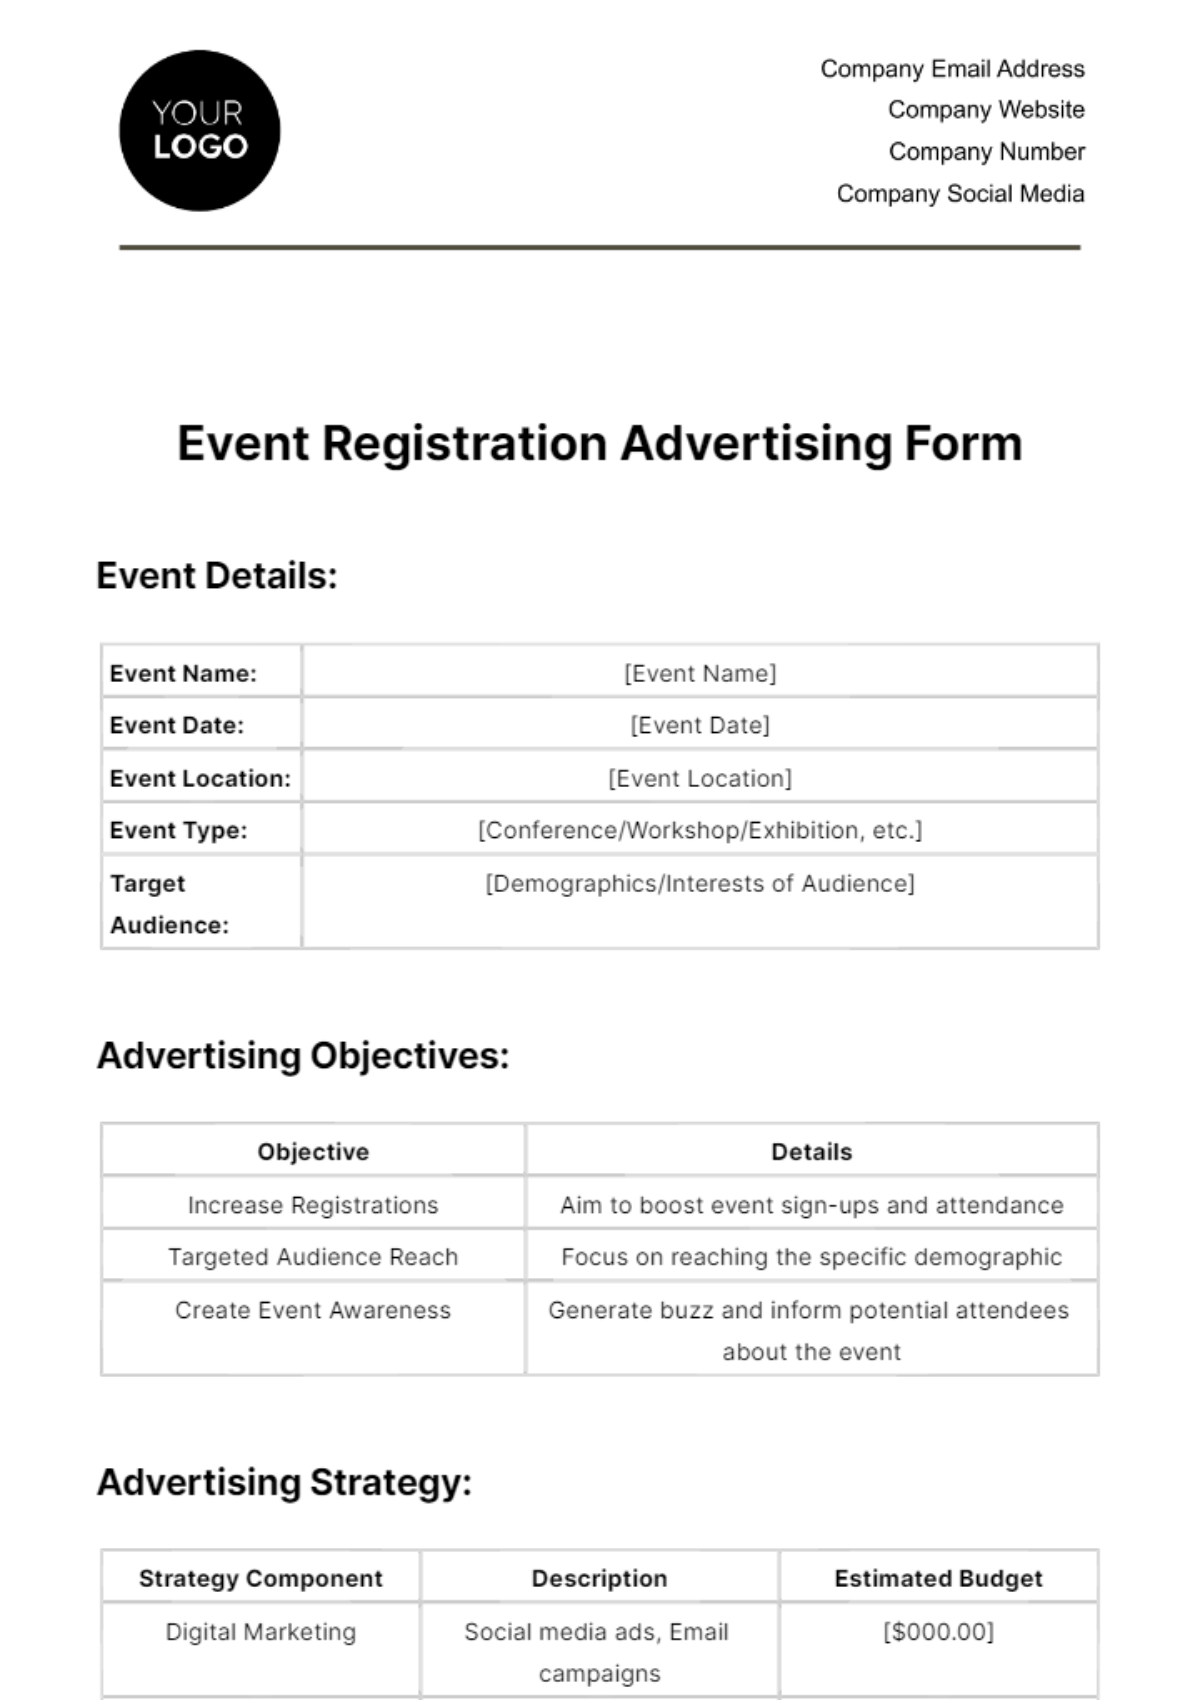 Event Registration Advertising Form Template